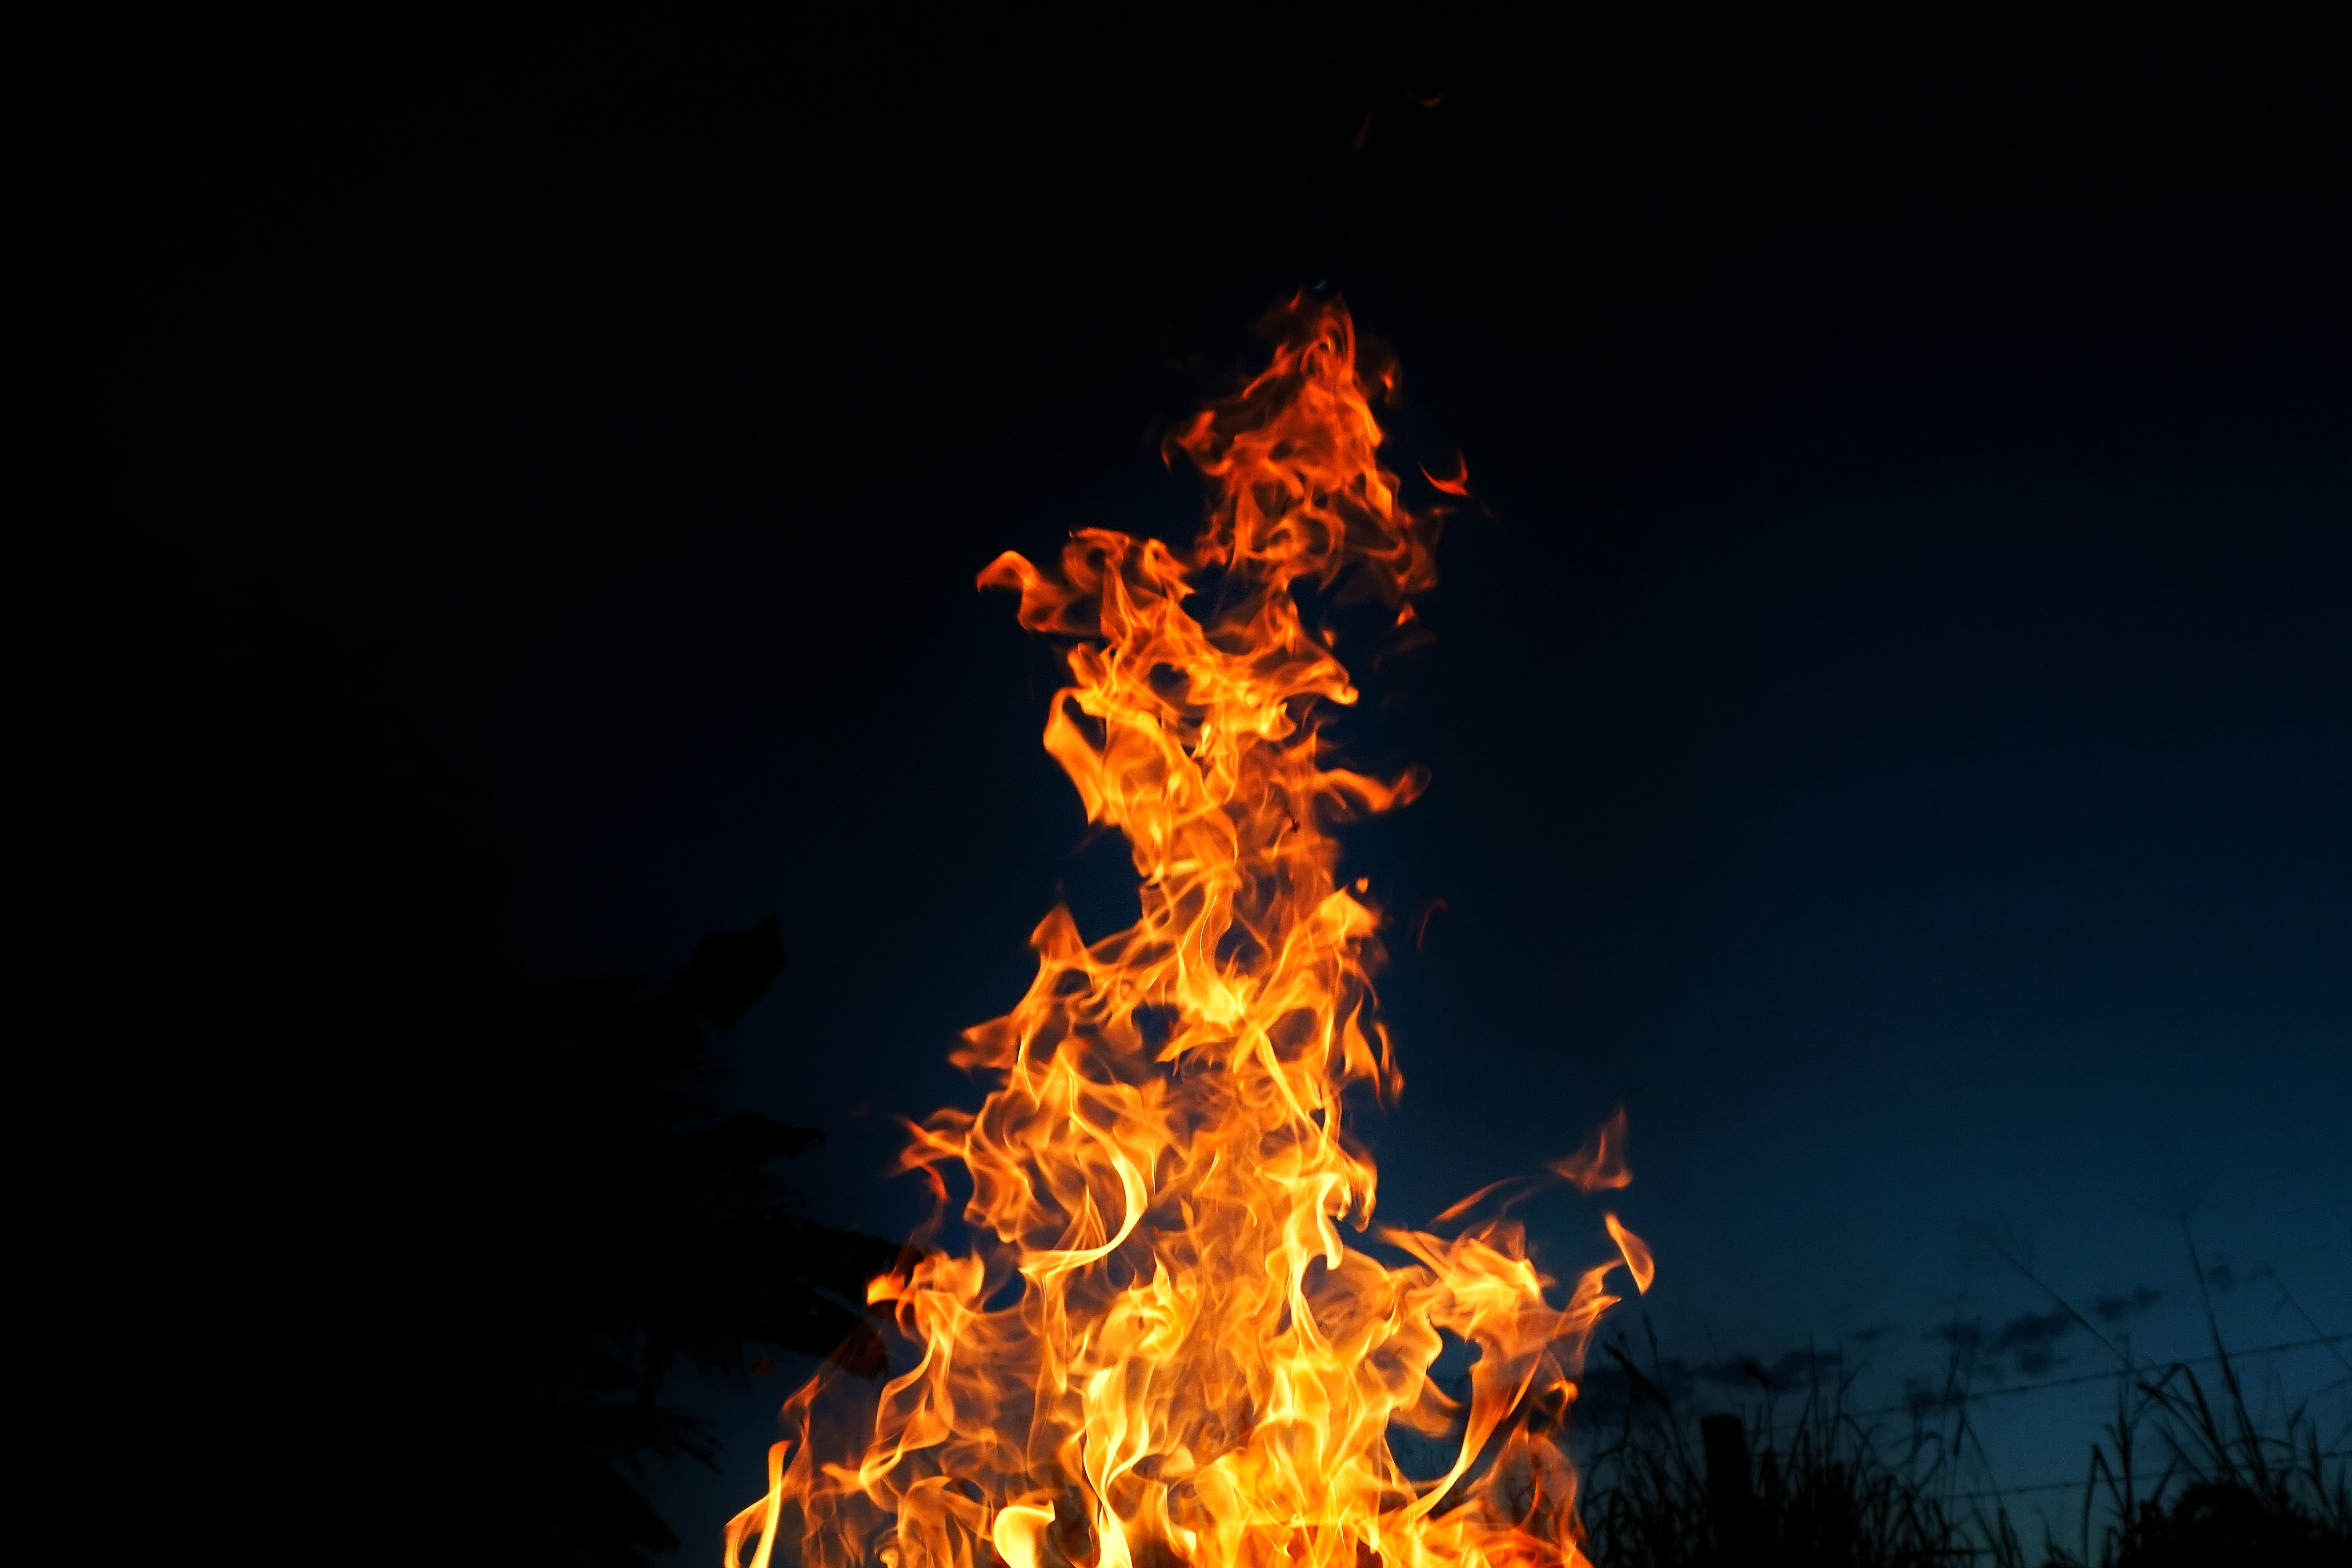 flame during nighttime, fire, flames, effect, hot, orange, fierce